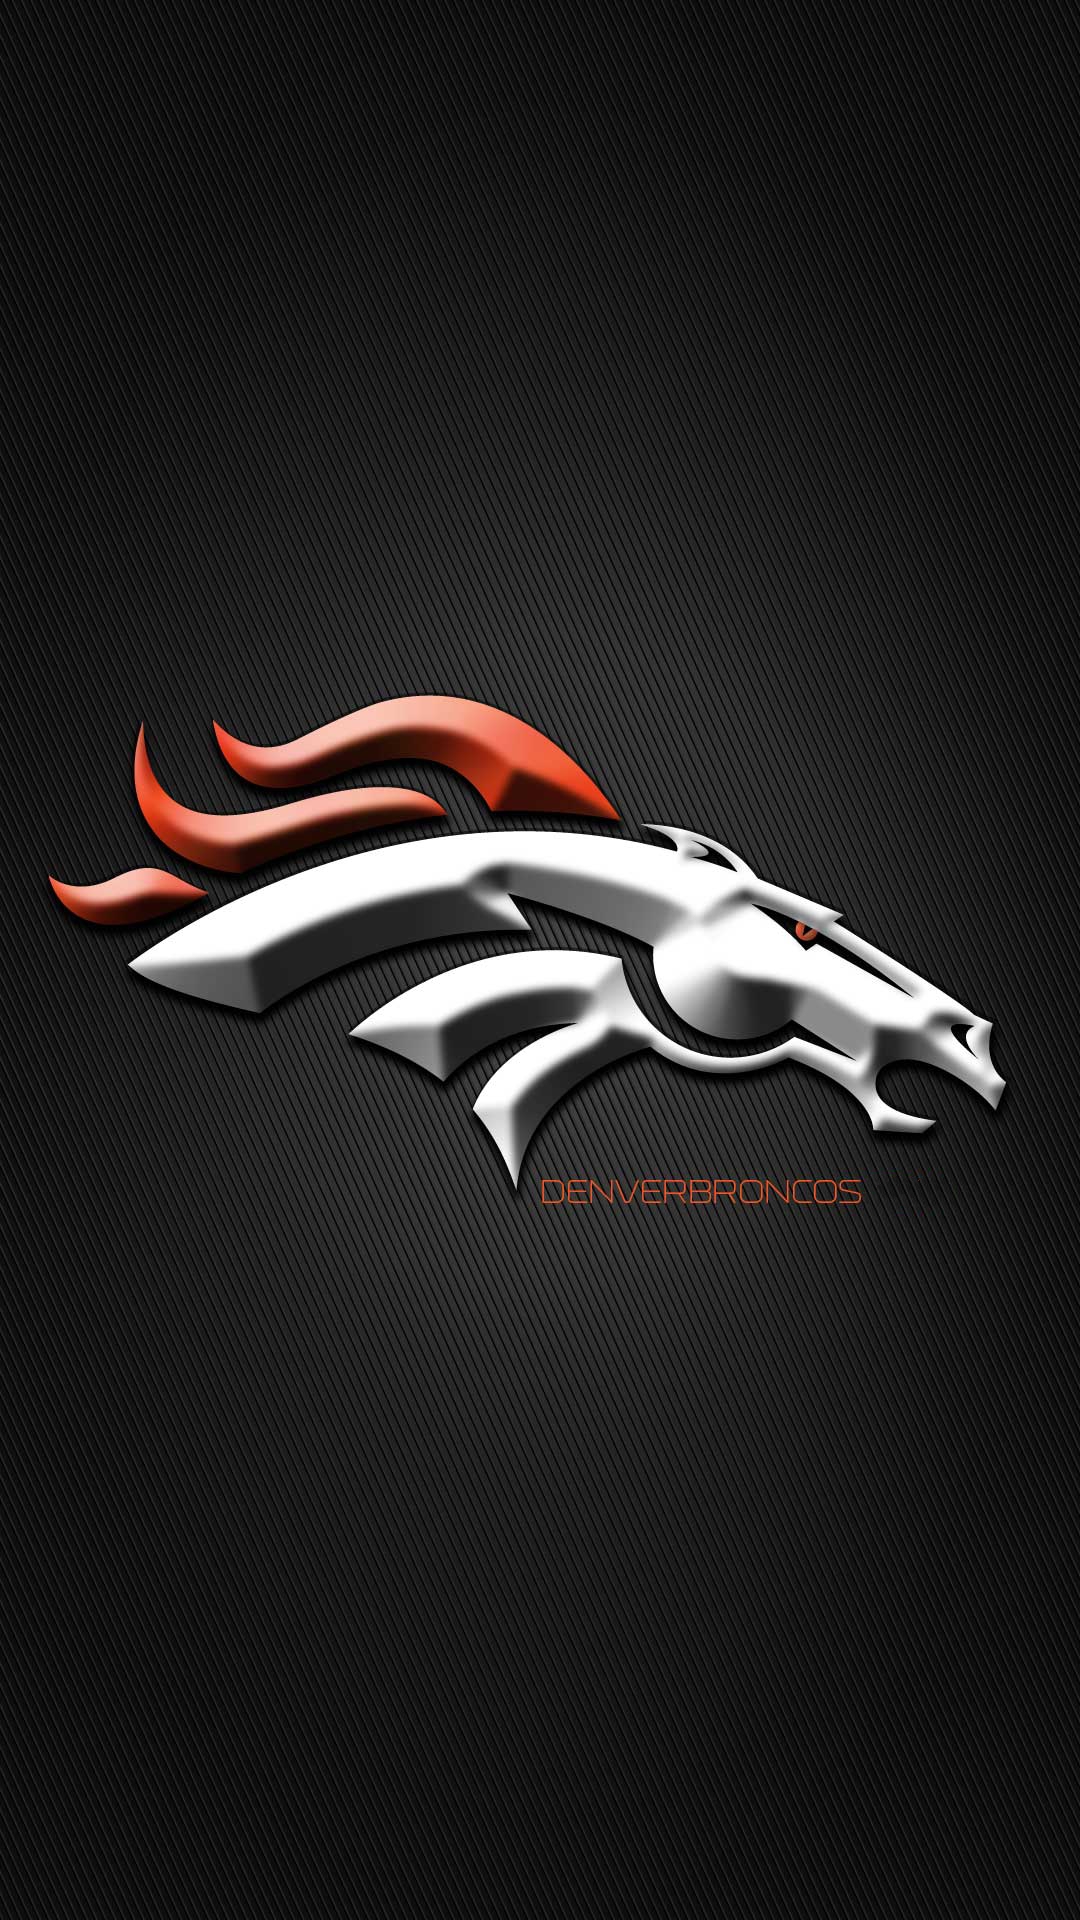  Download Denver Broncos iPhone 5 Wallpaper 1080x1920